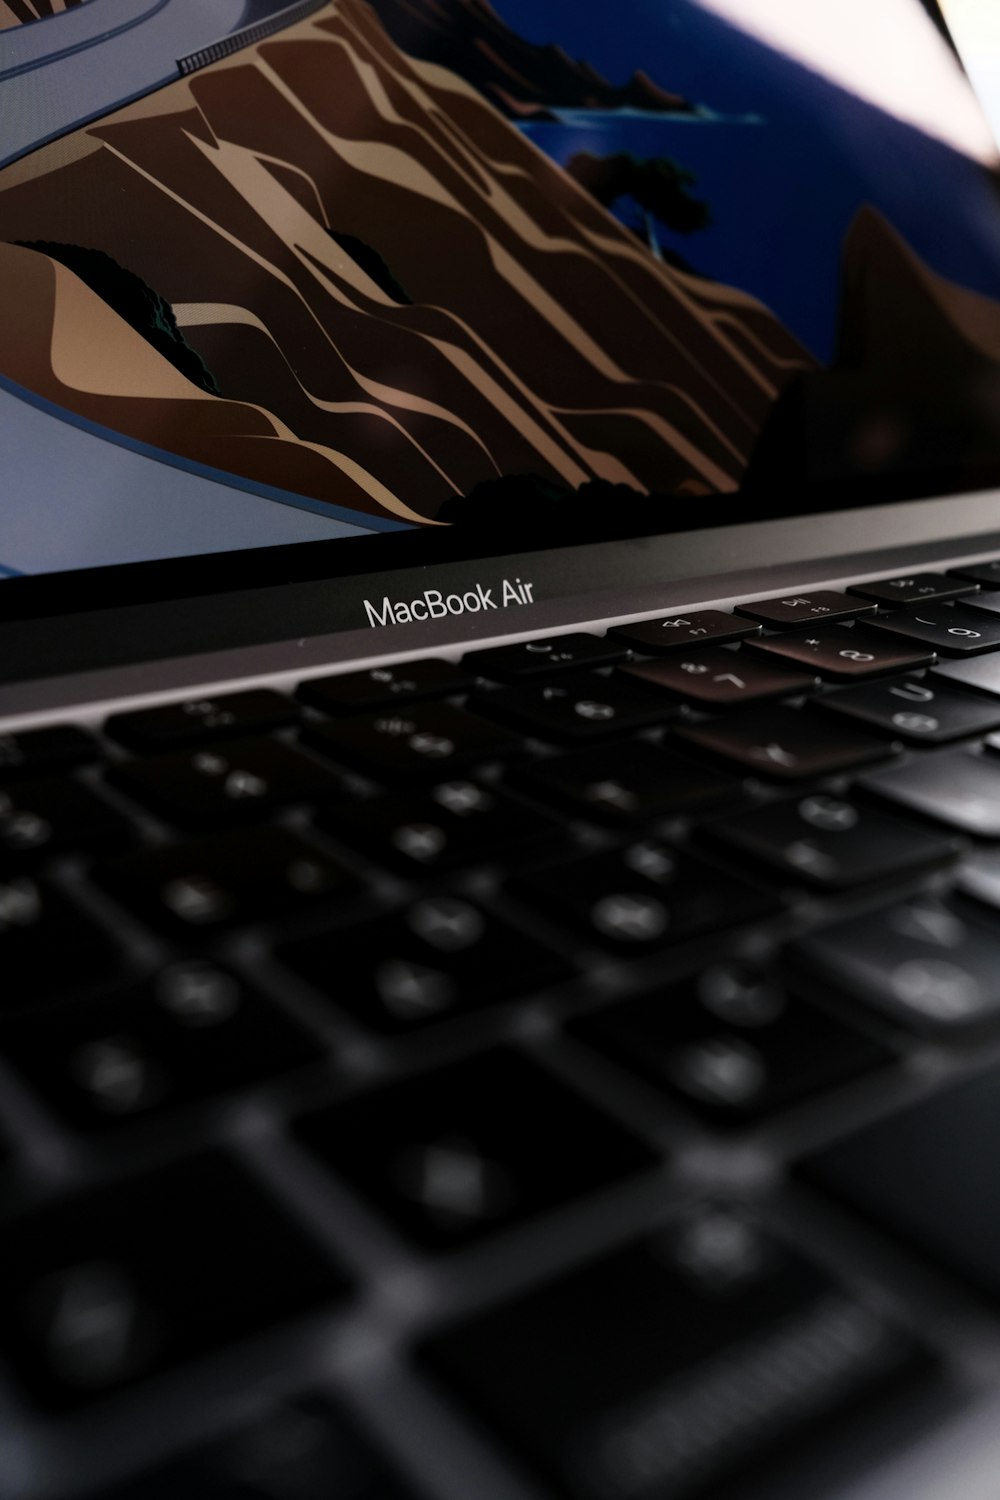 a close up of a macbook air laptop